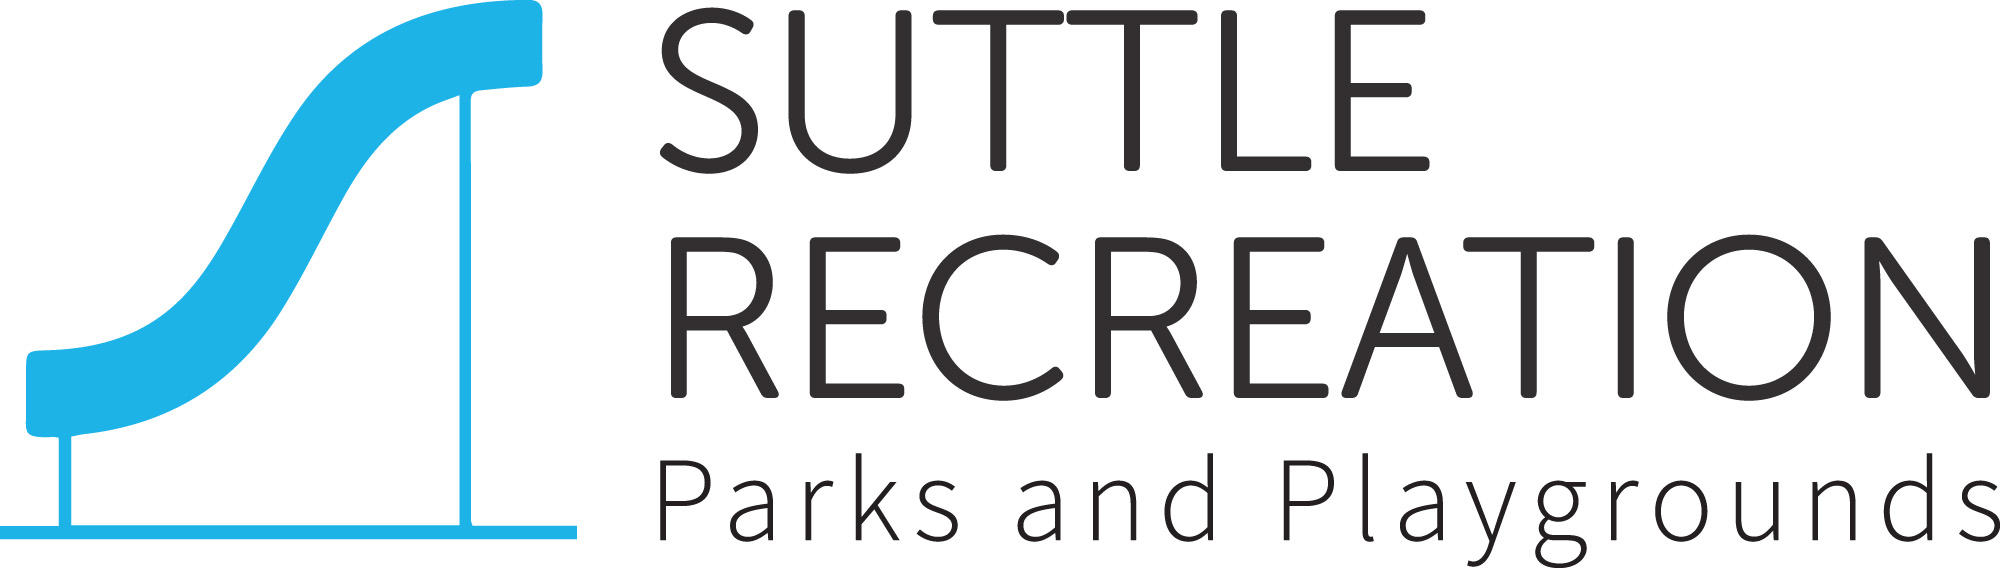 Suttle Recreation Logo